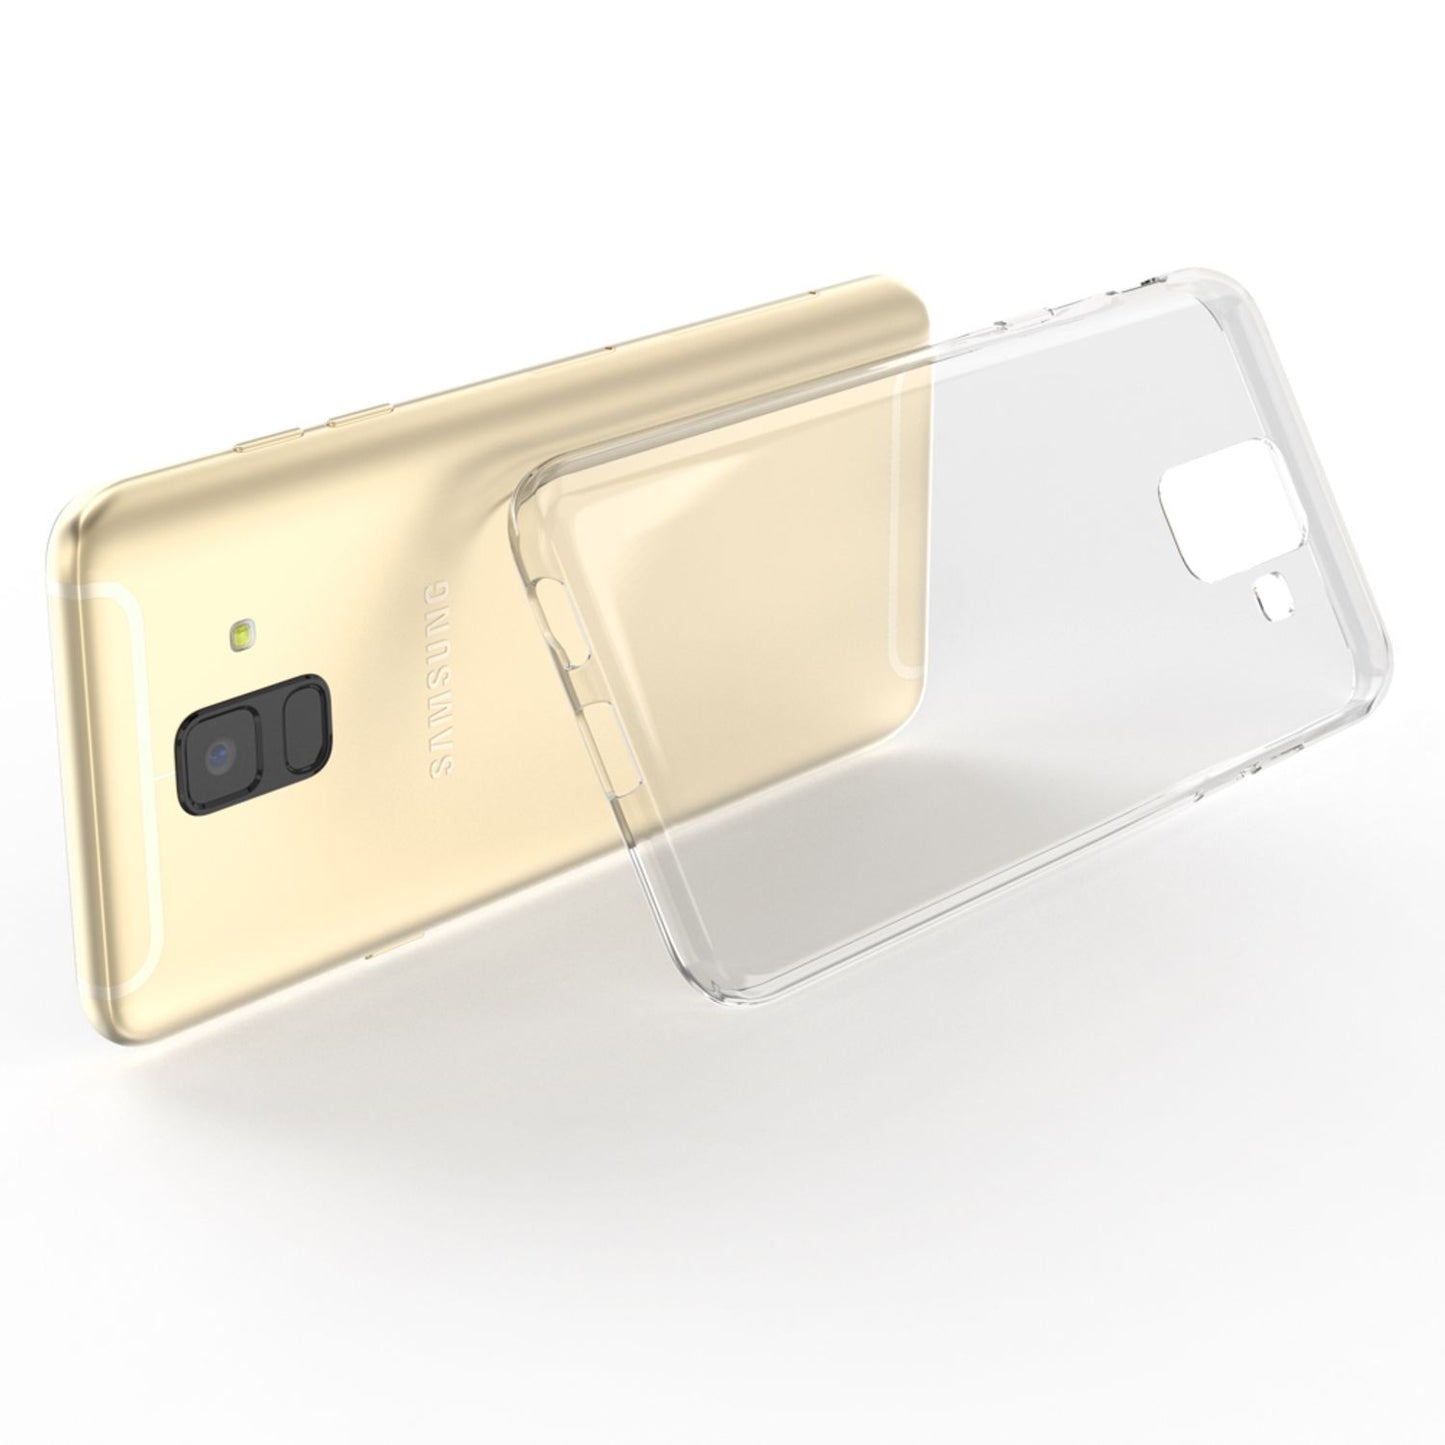 Samsung Galaxy A6 Handy Hülle von NALIA, Soft Slim TPU Silikon Case Cover Schutz